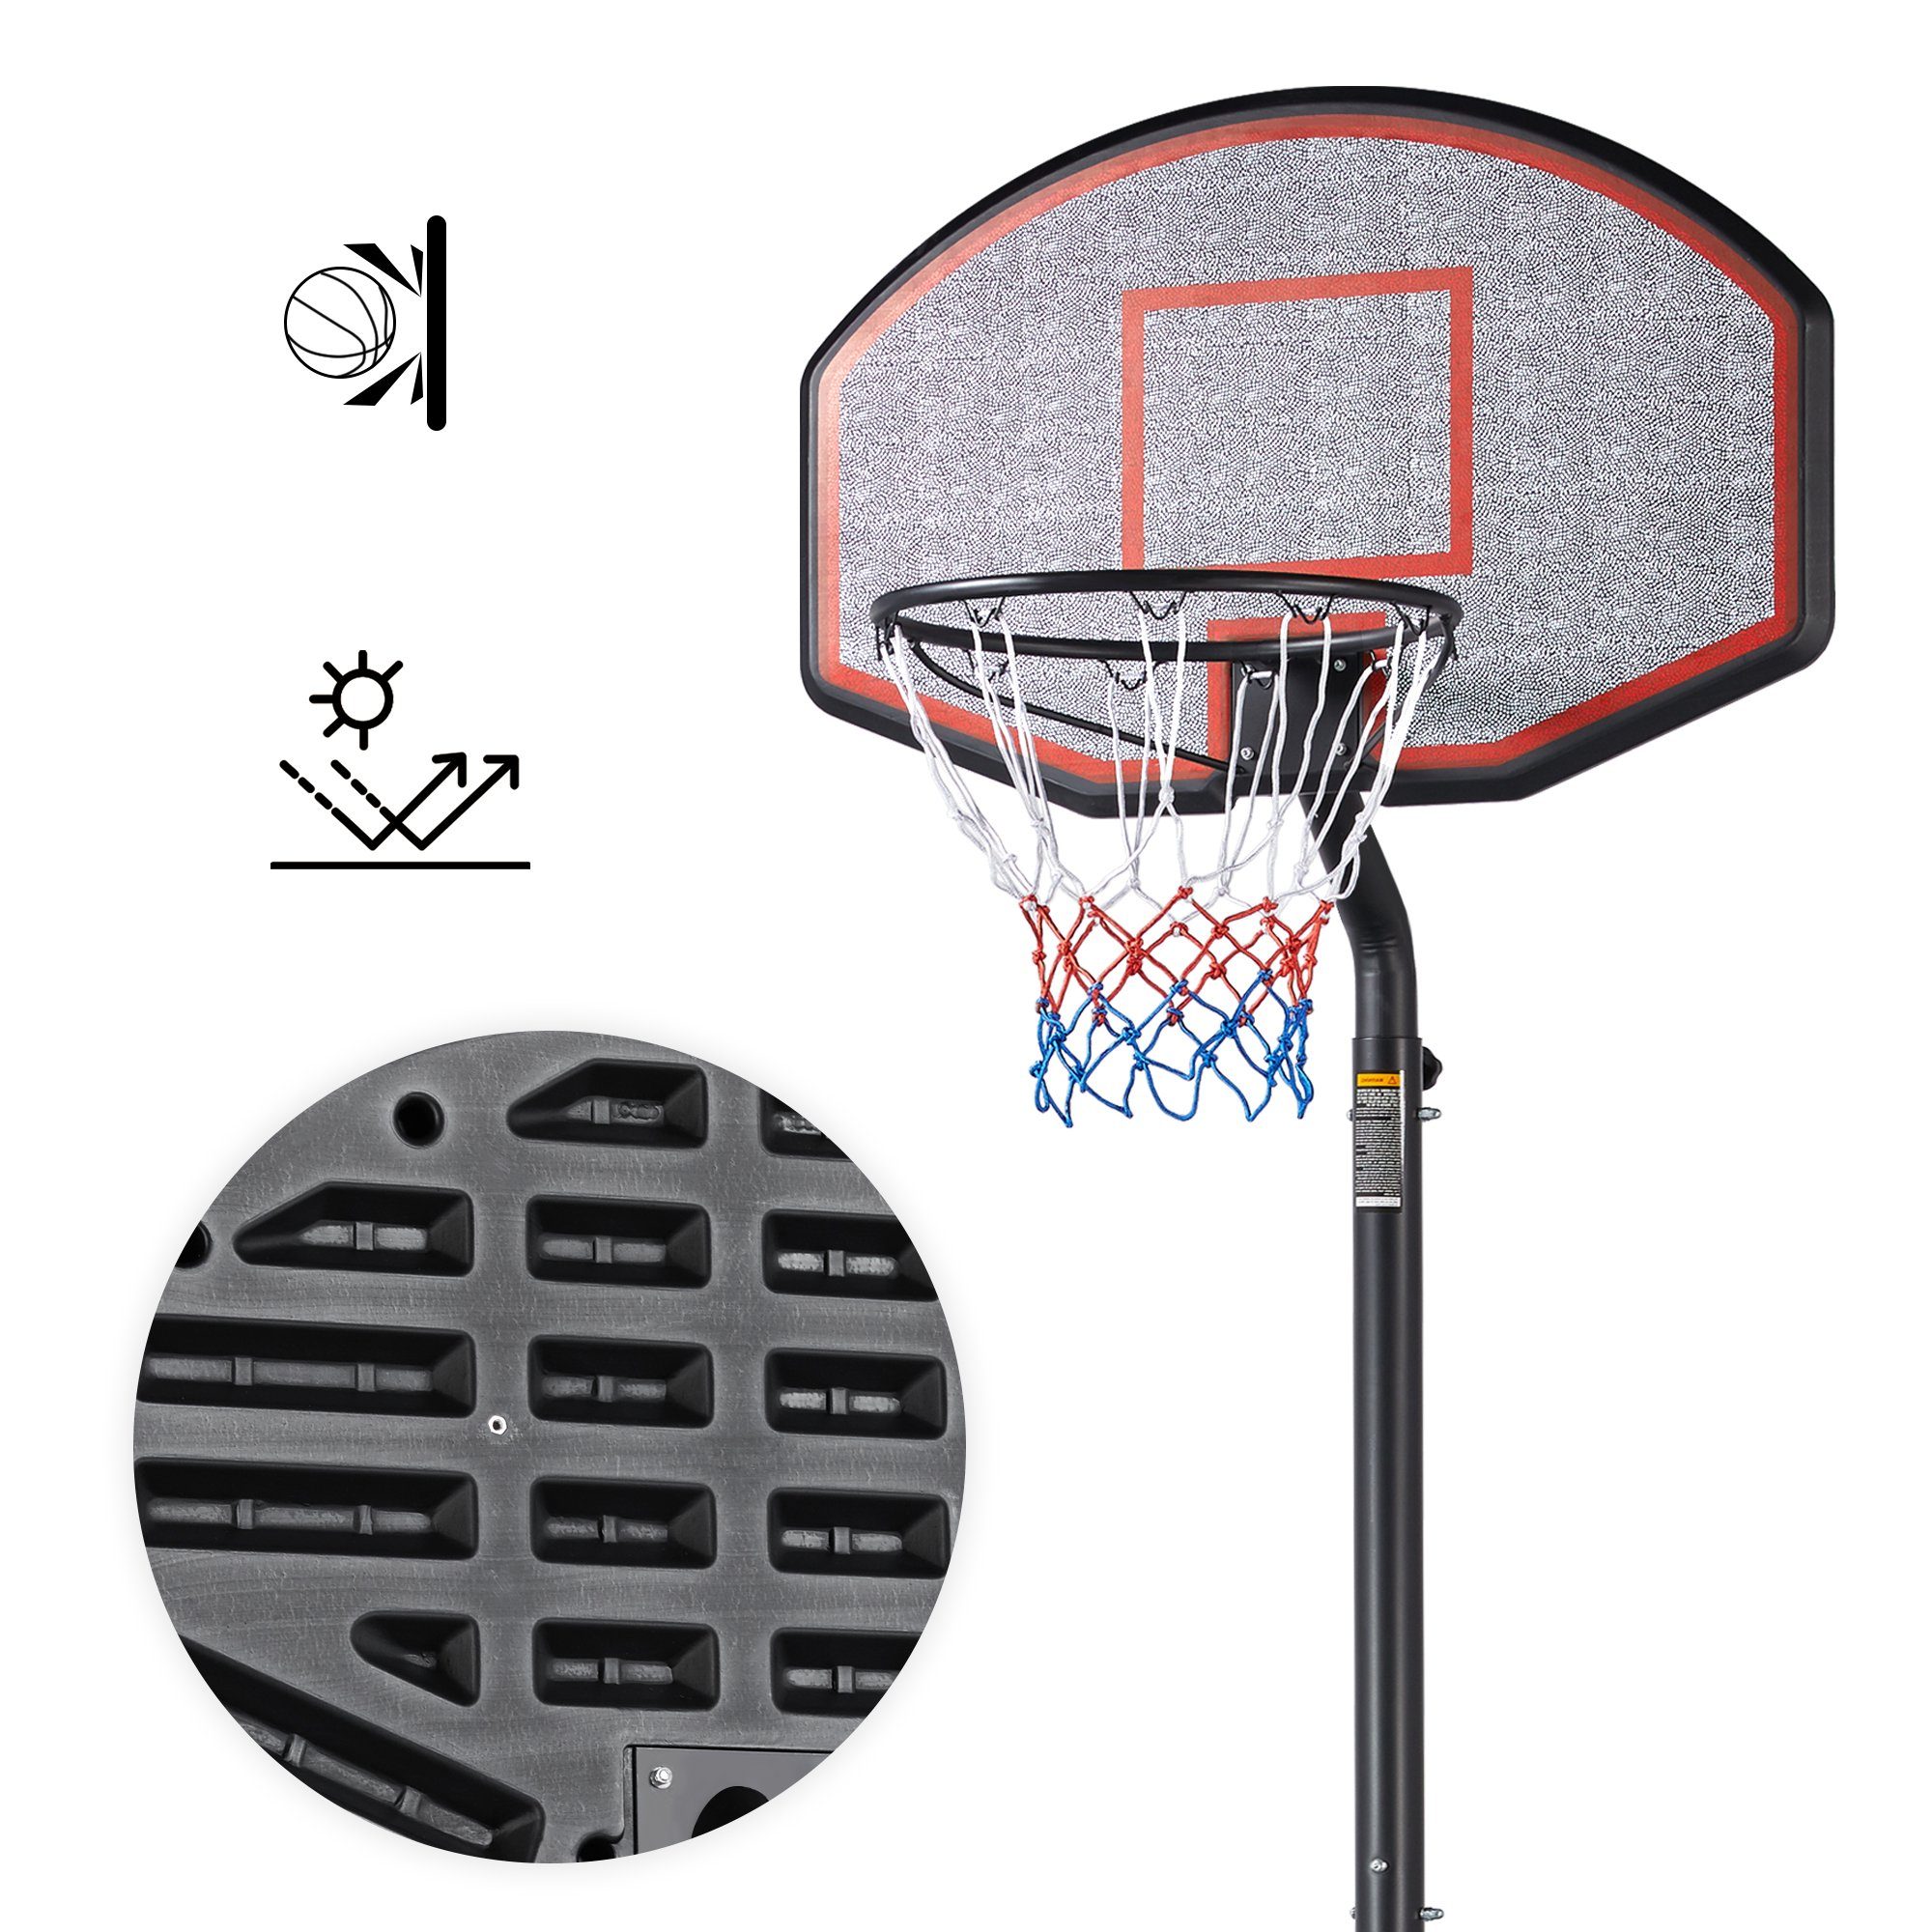 Yaheetech Basketballständer, Basketballkorb verstellbar Korbhöhe cm 304-353